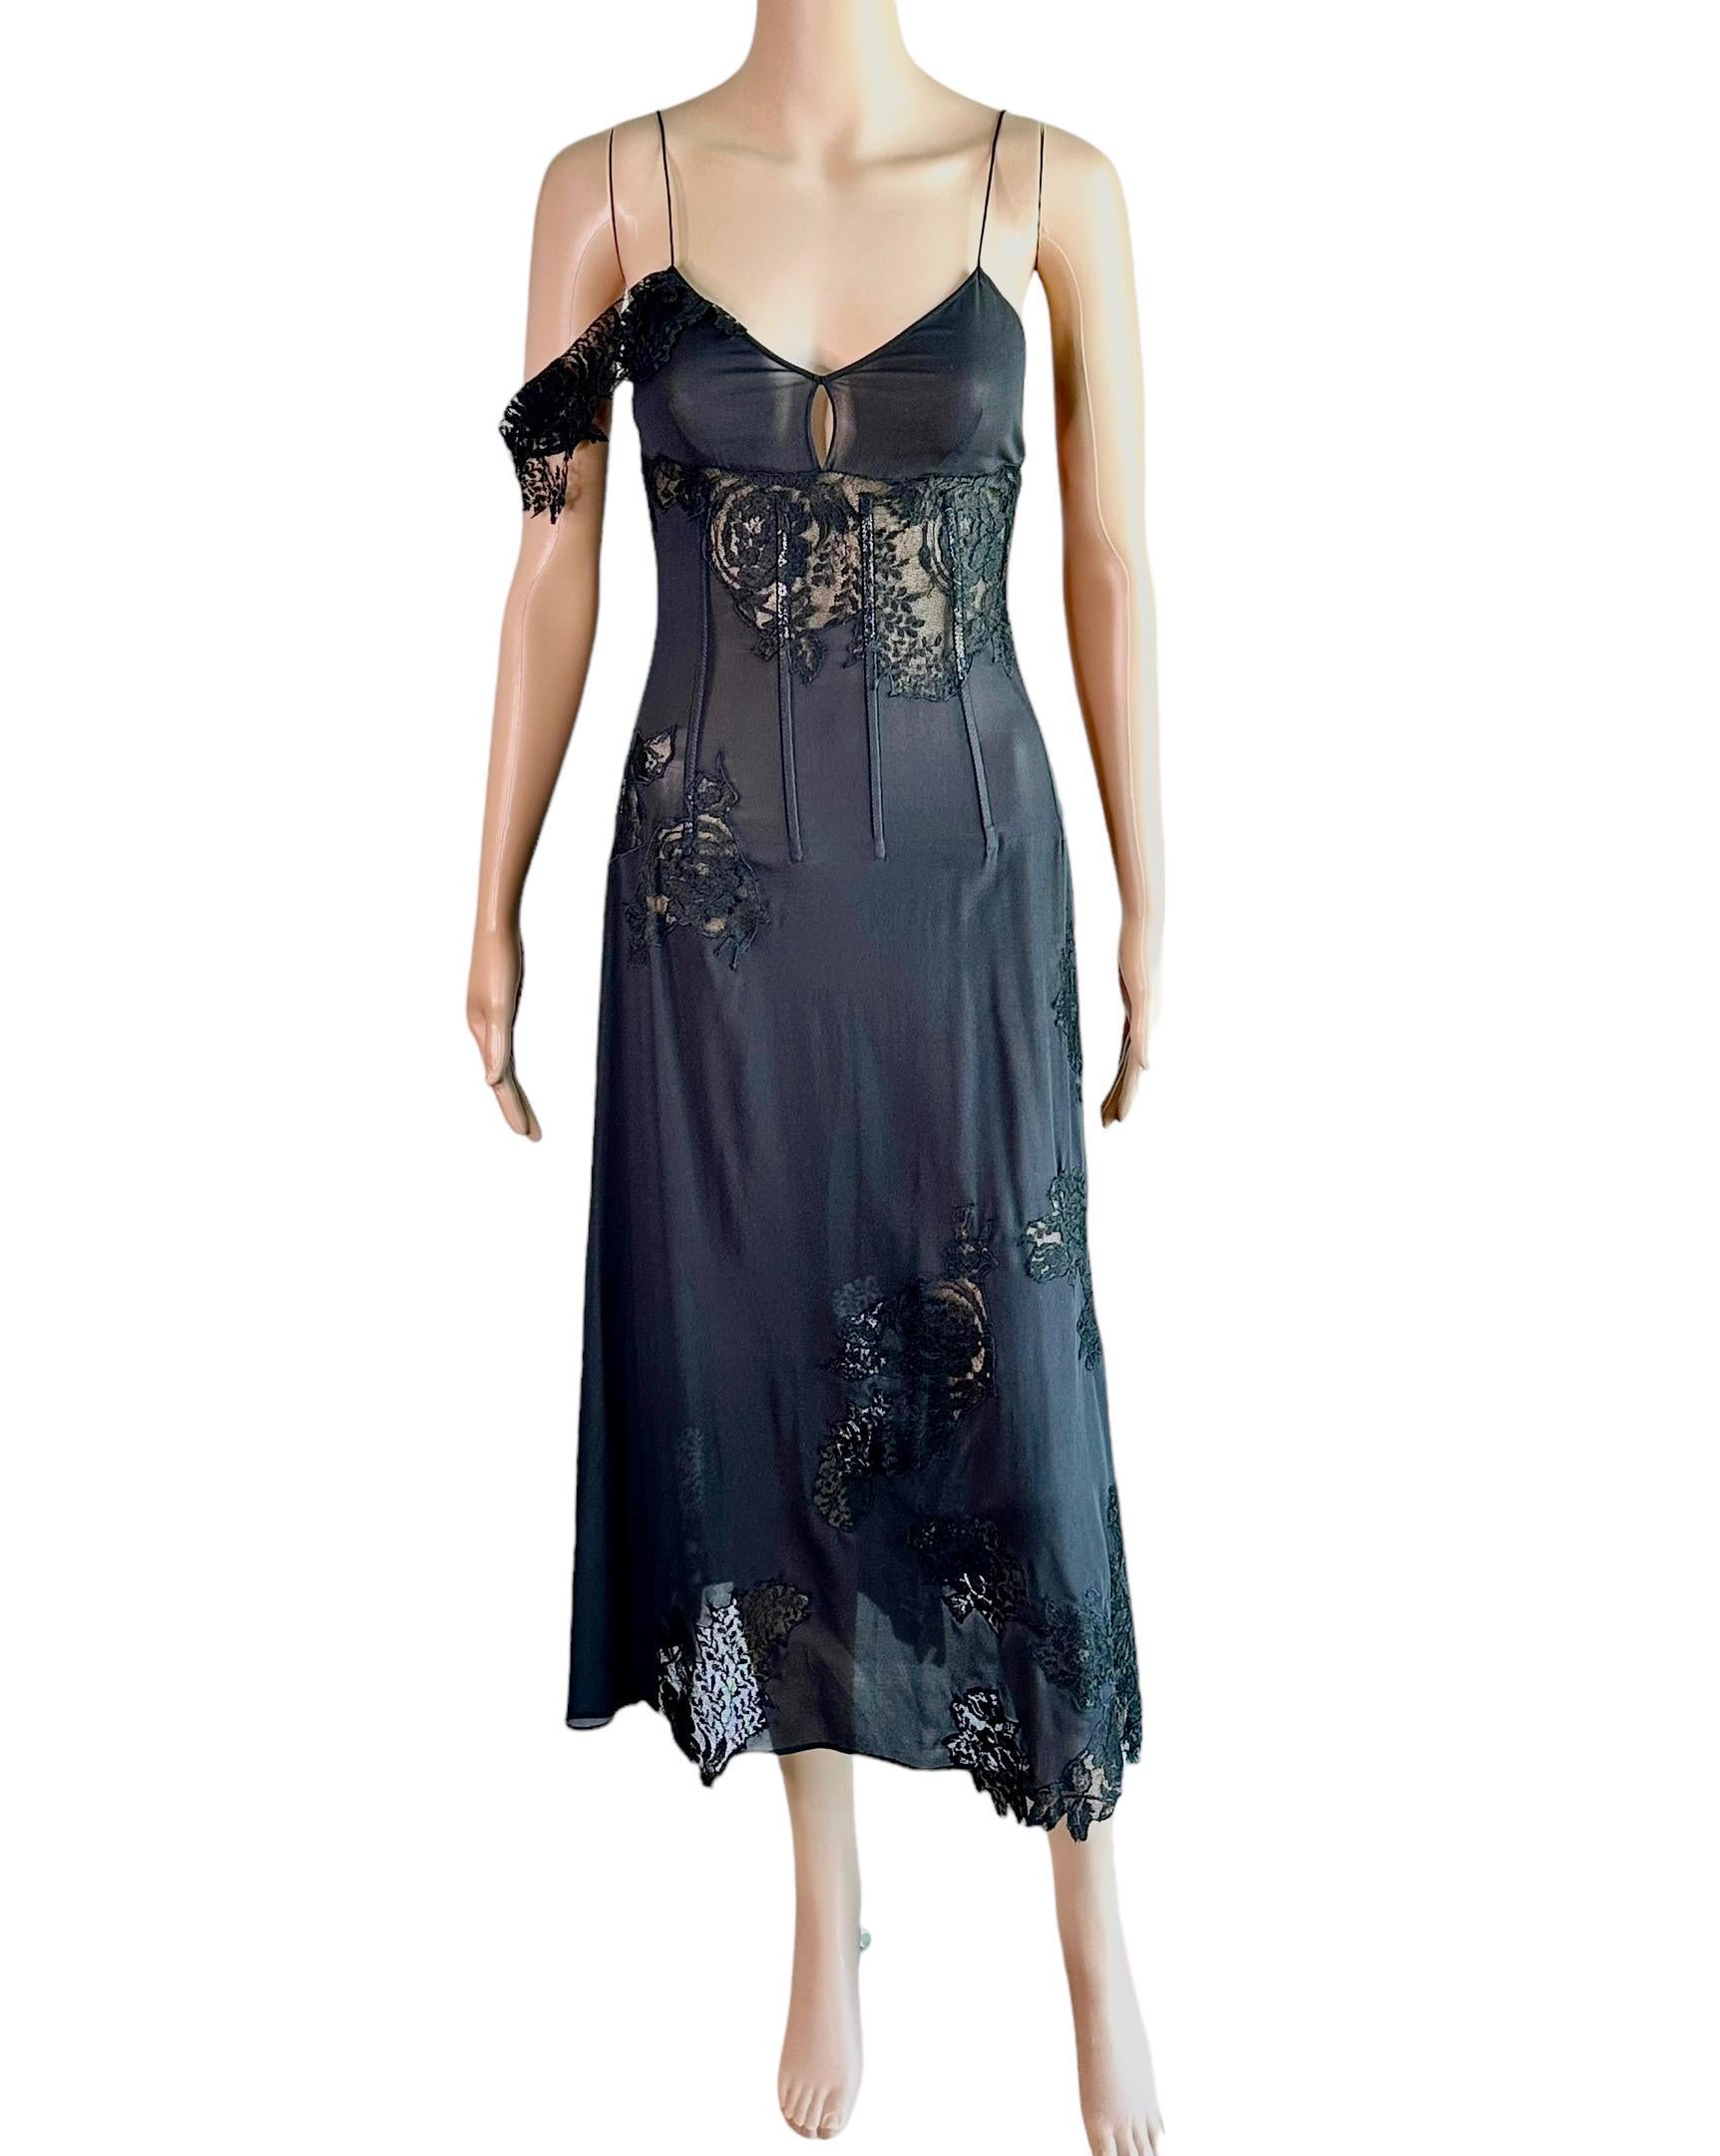 Dolce & Gabbana S/S 2002 Runway Unworn Sheer Lace Corset Black Midi Dress For Sale 1